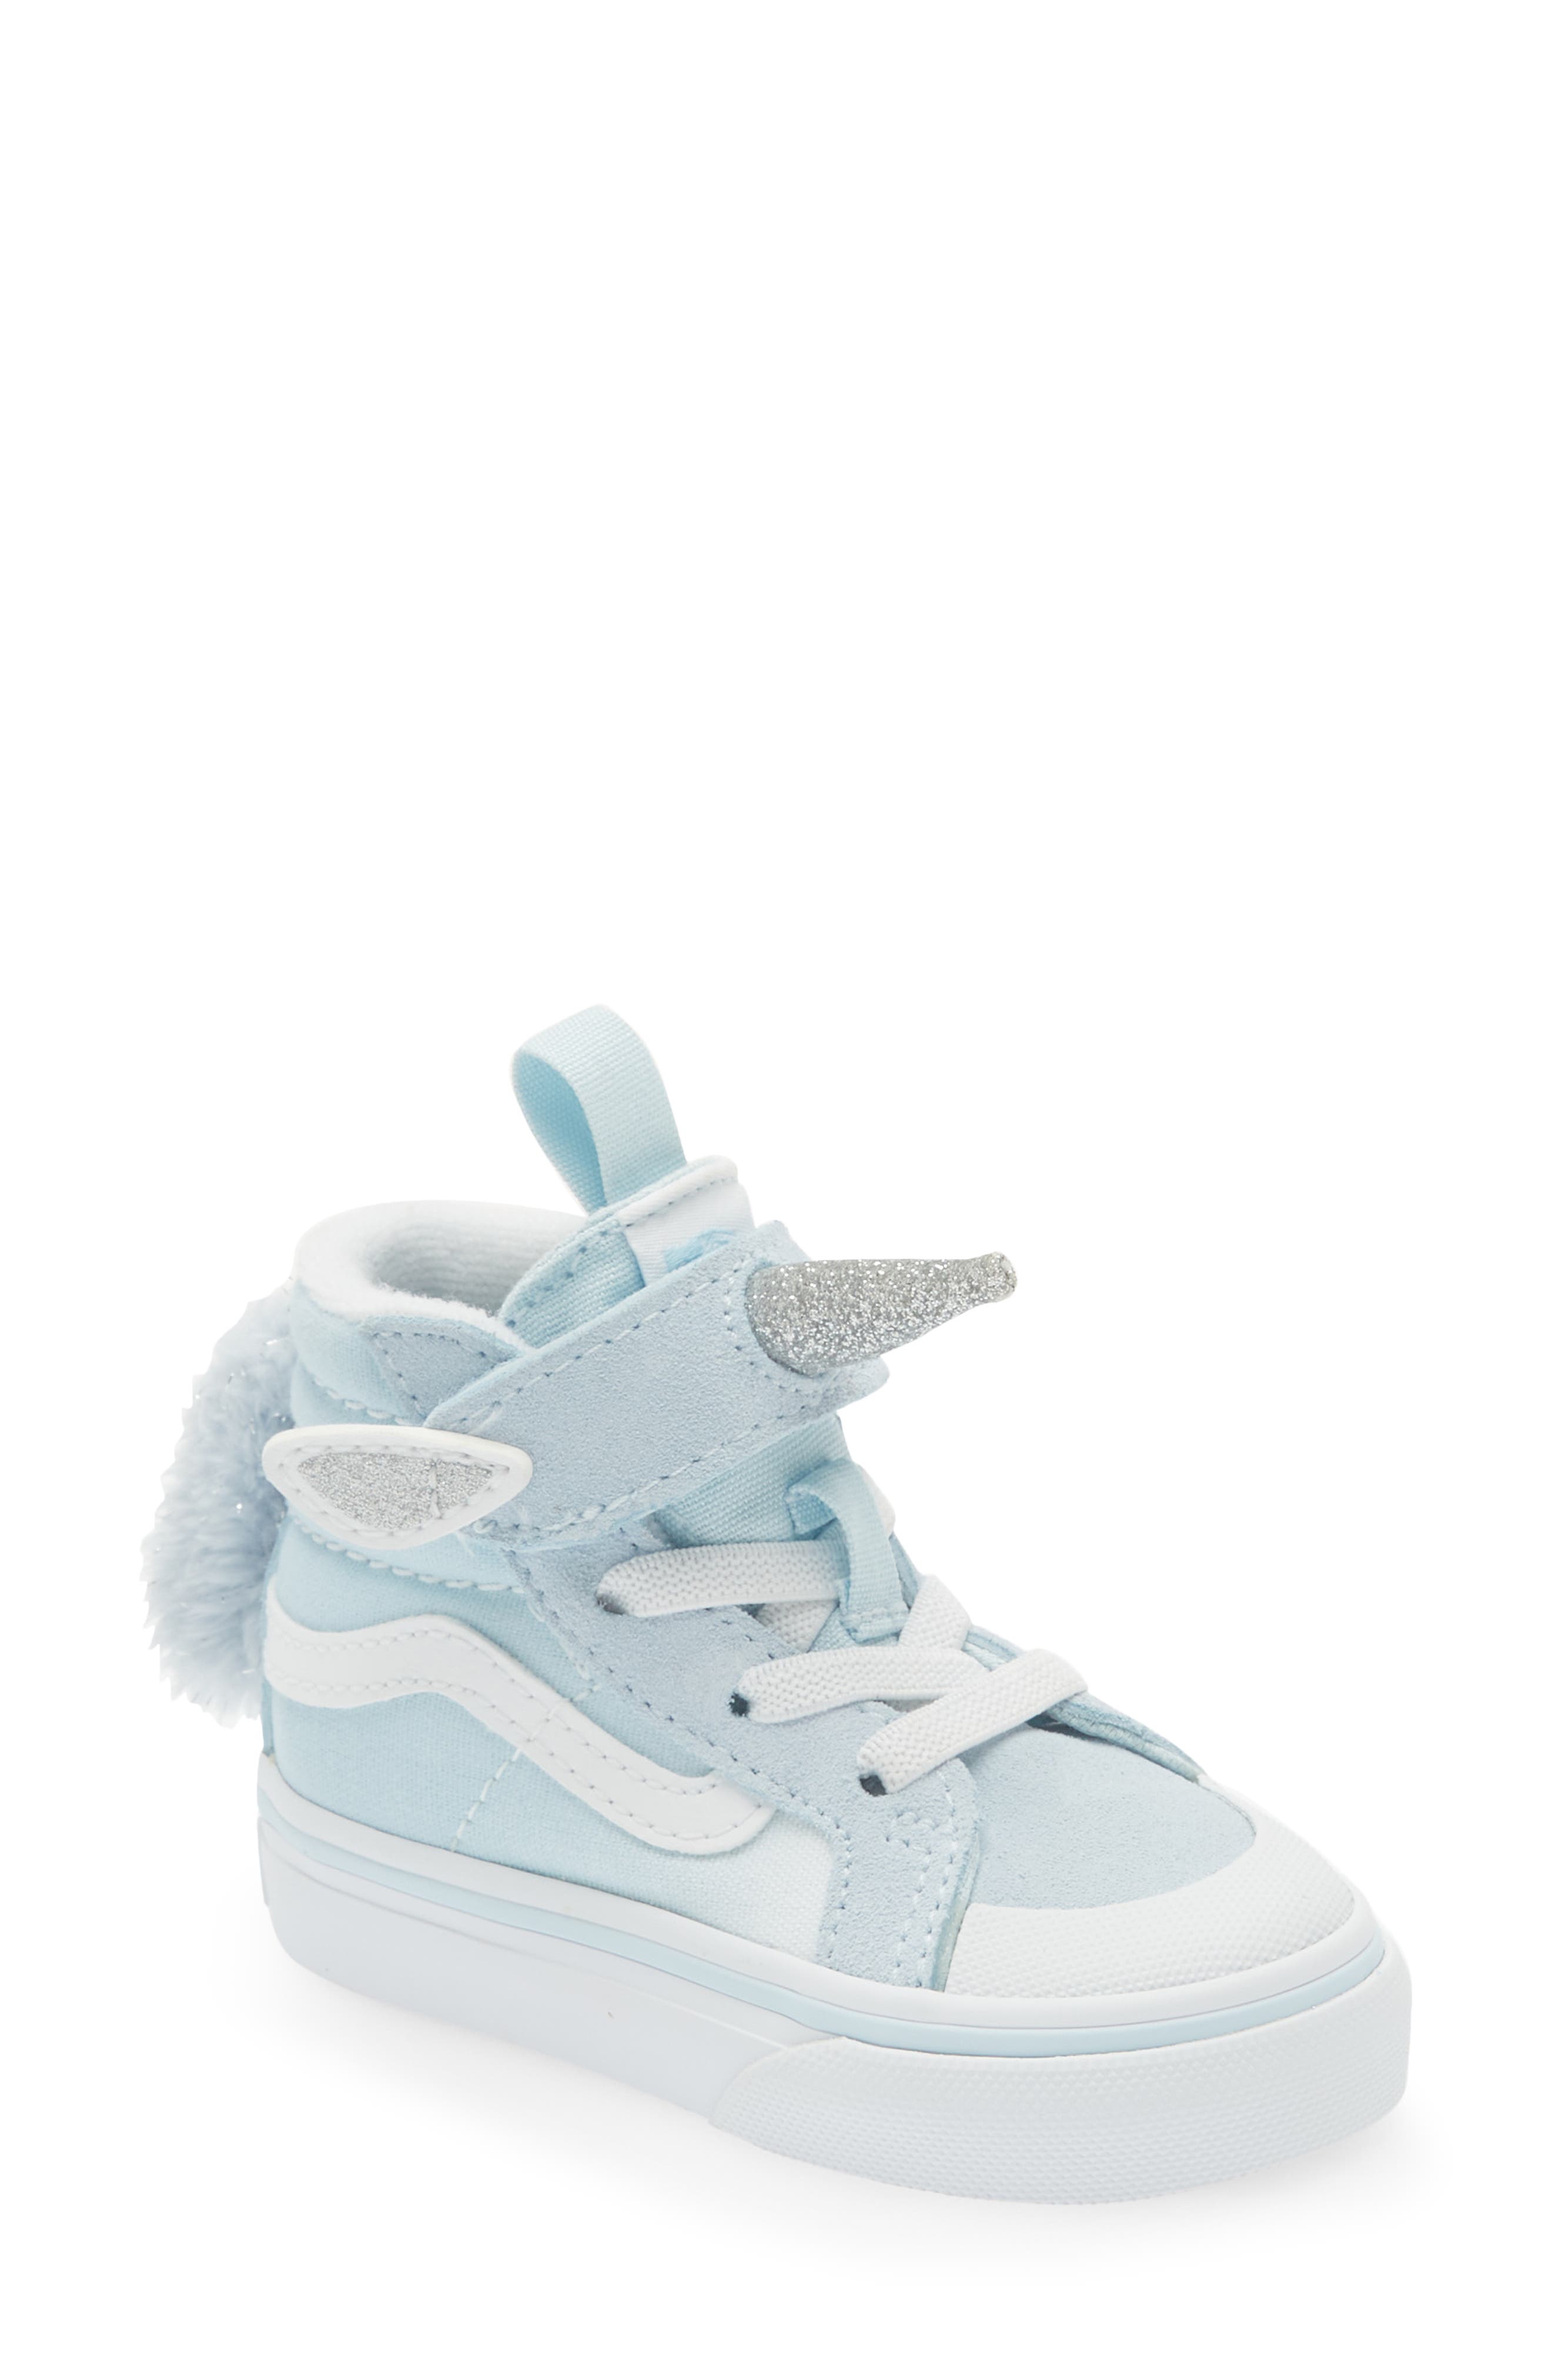 Vans Kids' Unicorn SK8-Hi Sneaker in Unicorn Delicate Blue/Silver